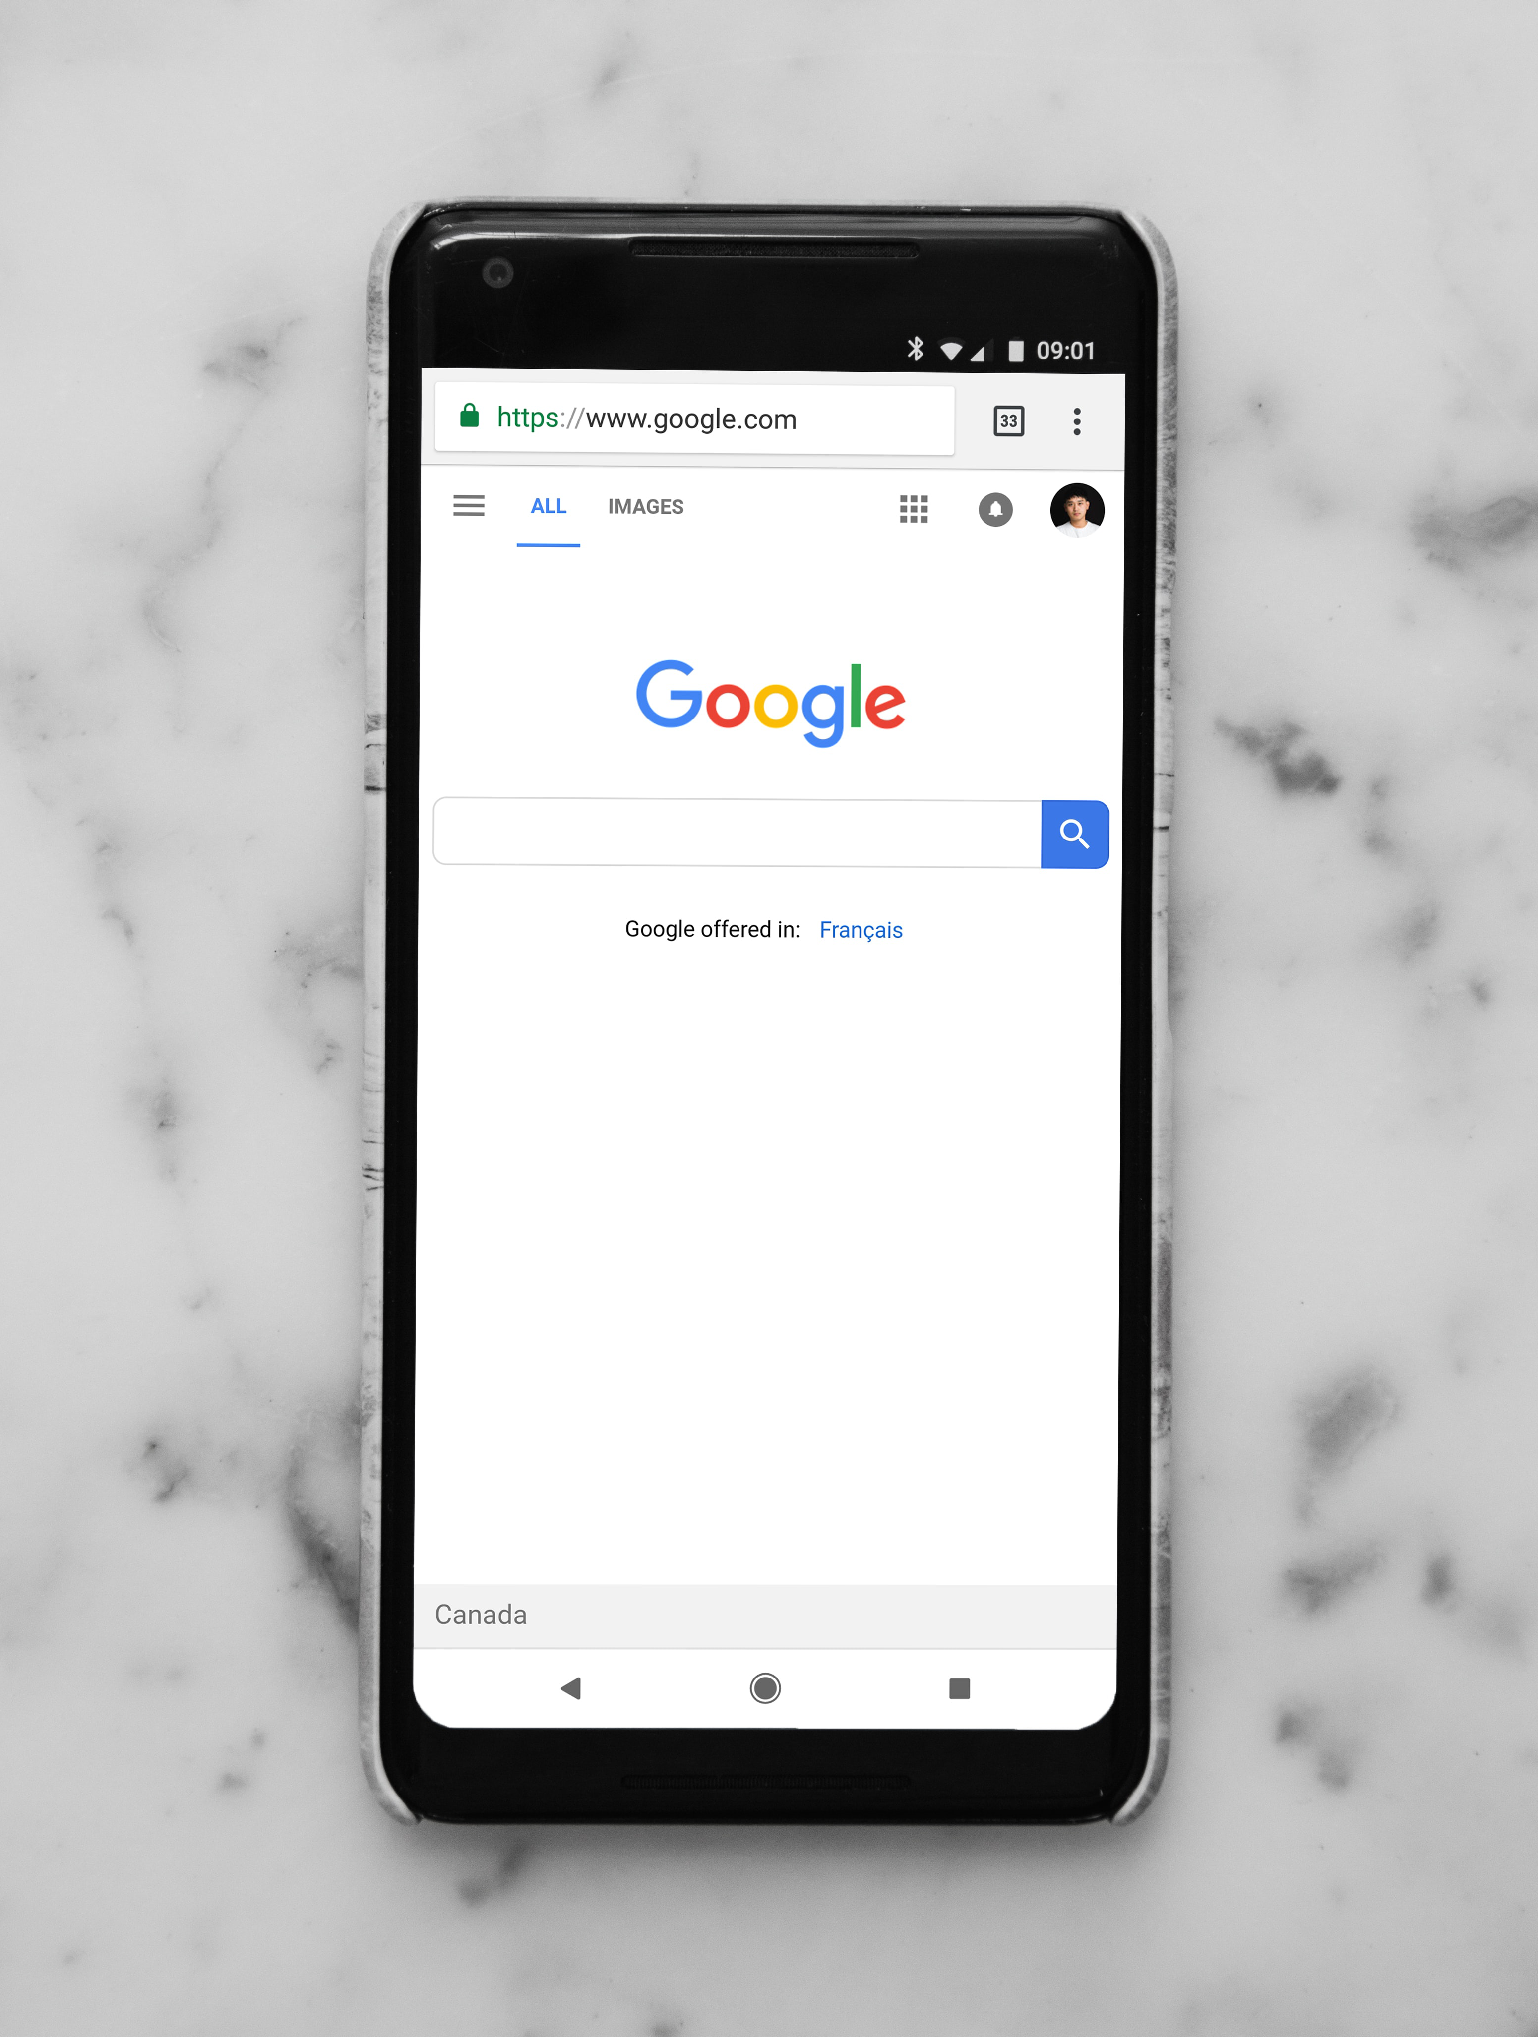 Google homepage on a smartphone